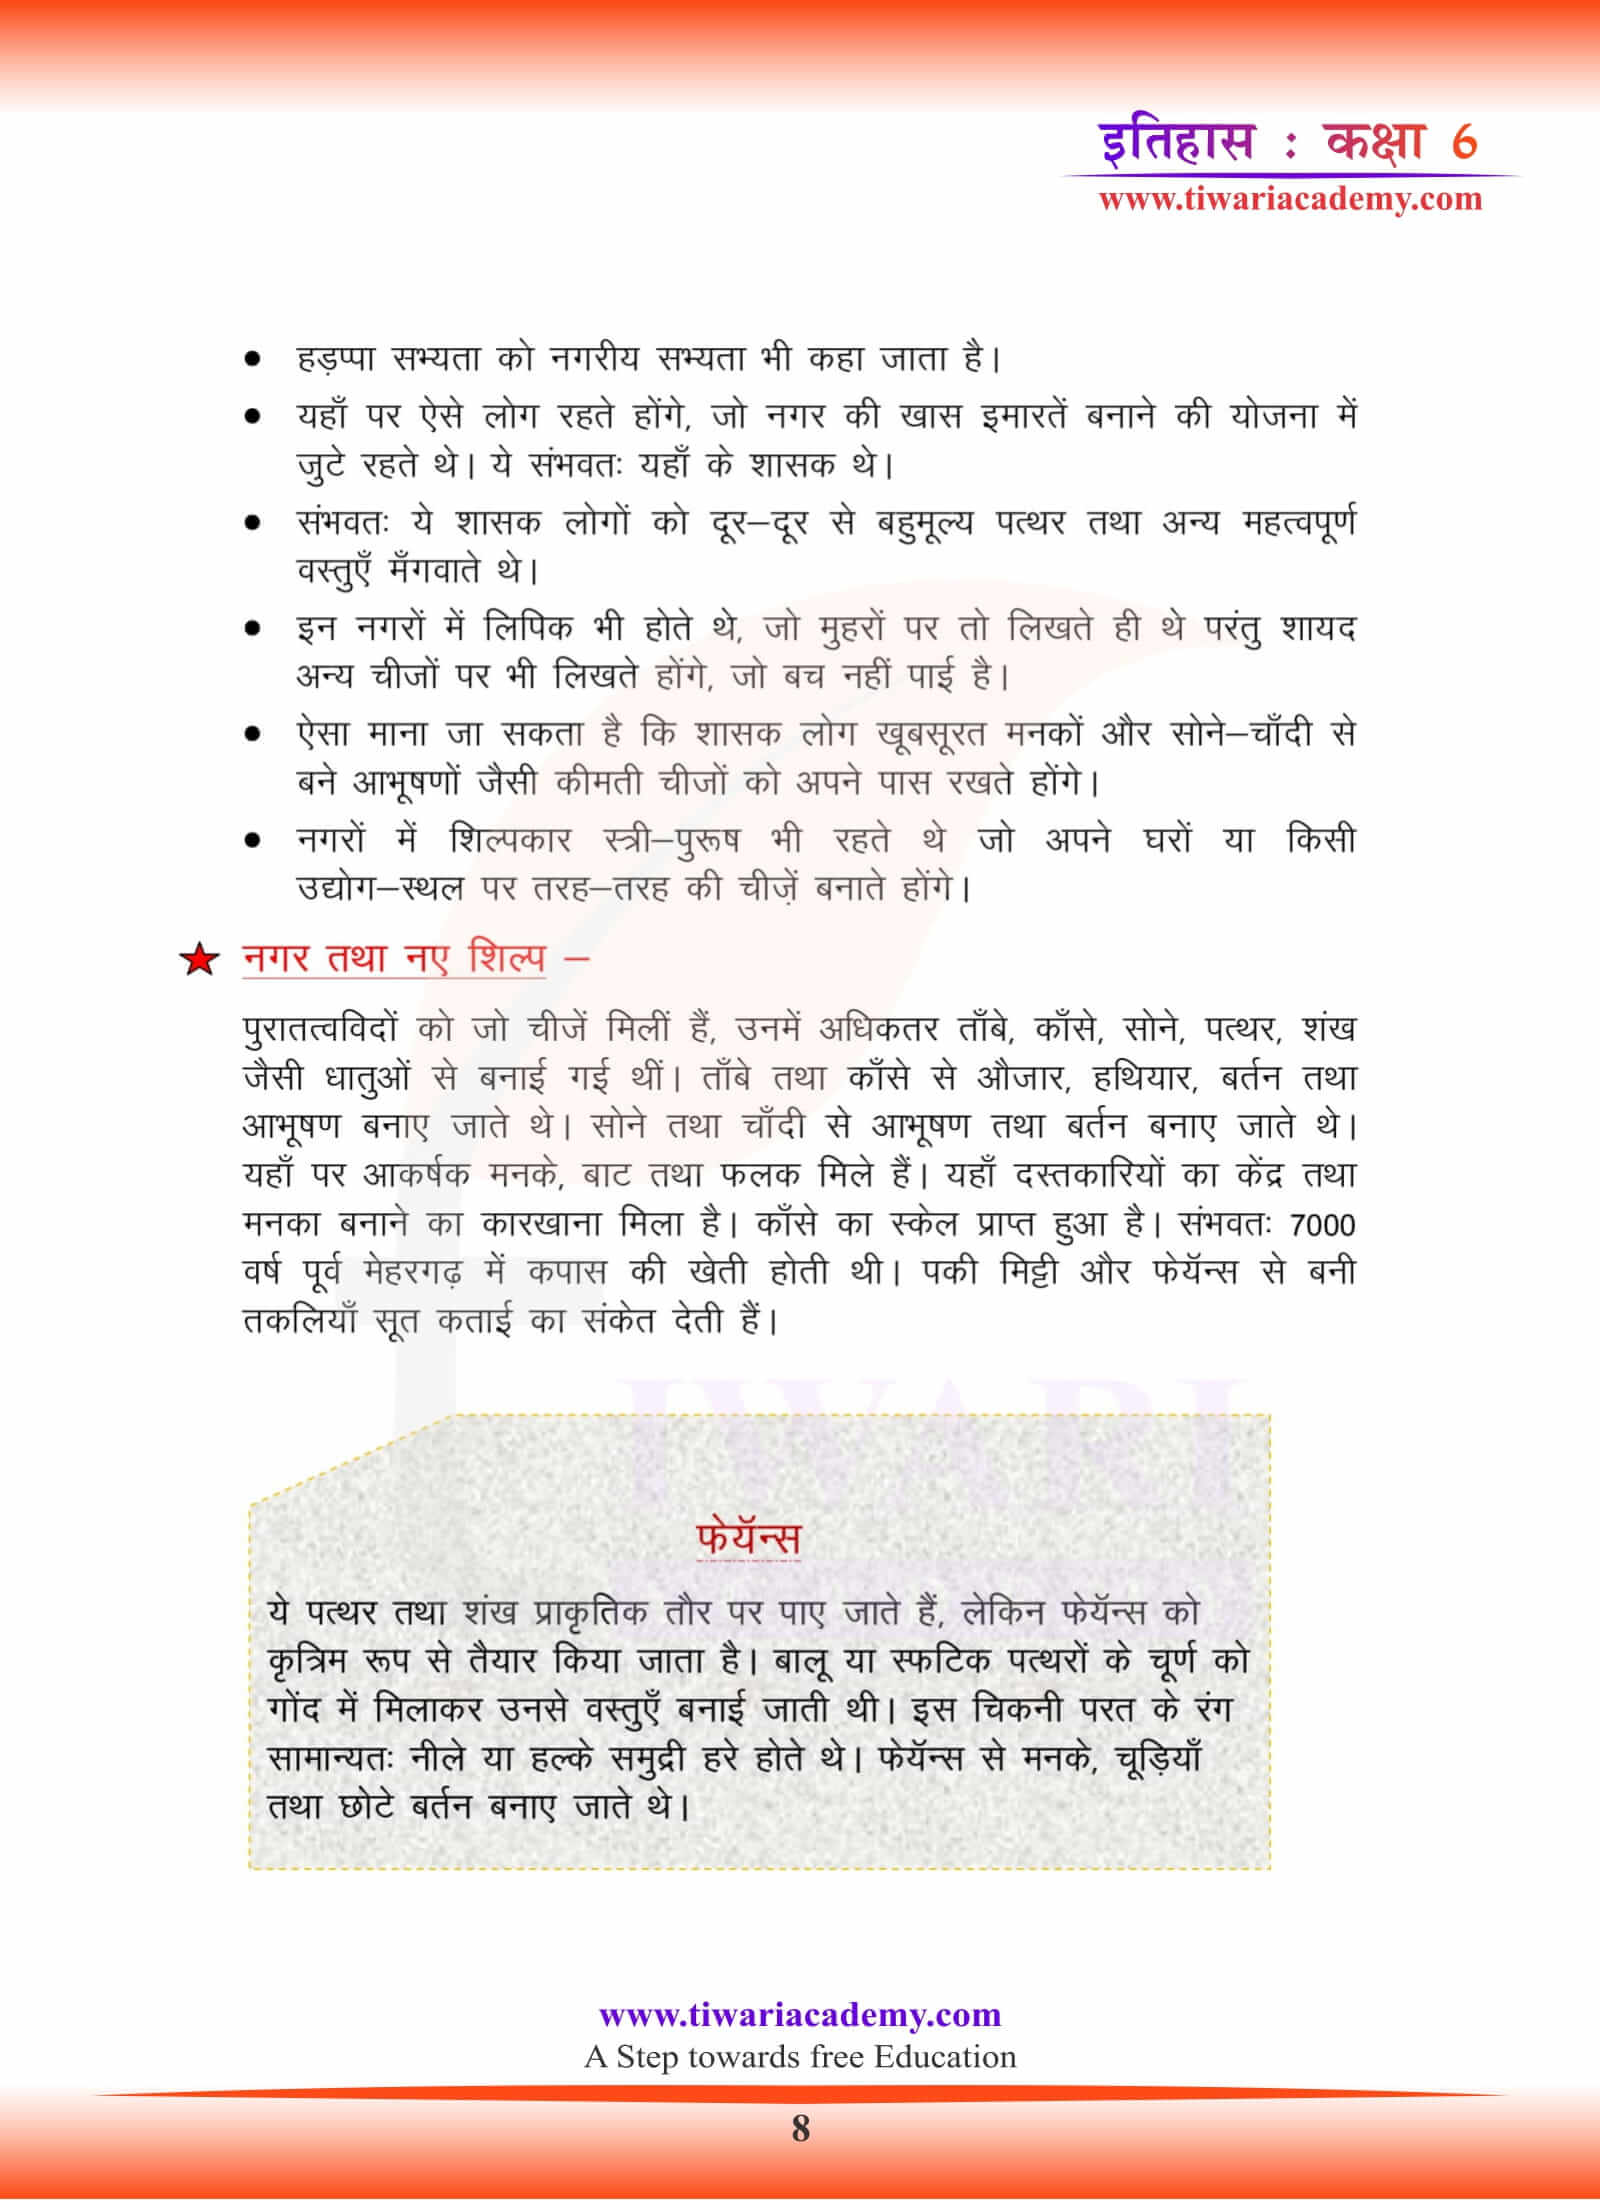 कक्षा 6 इतिहास अध्याय 3 हिंदी मीडियम नोट्स